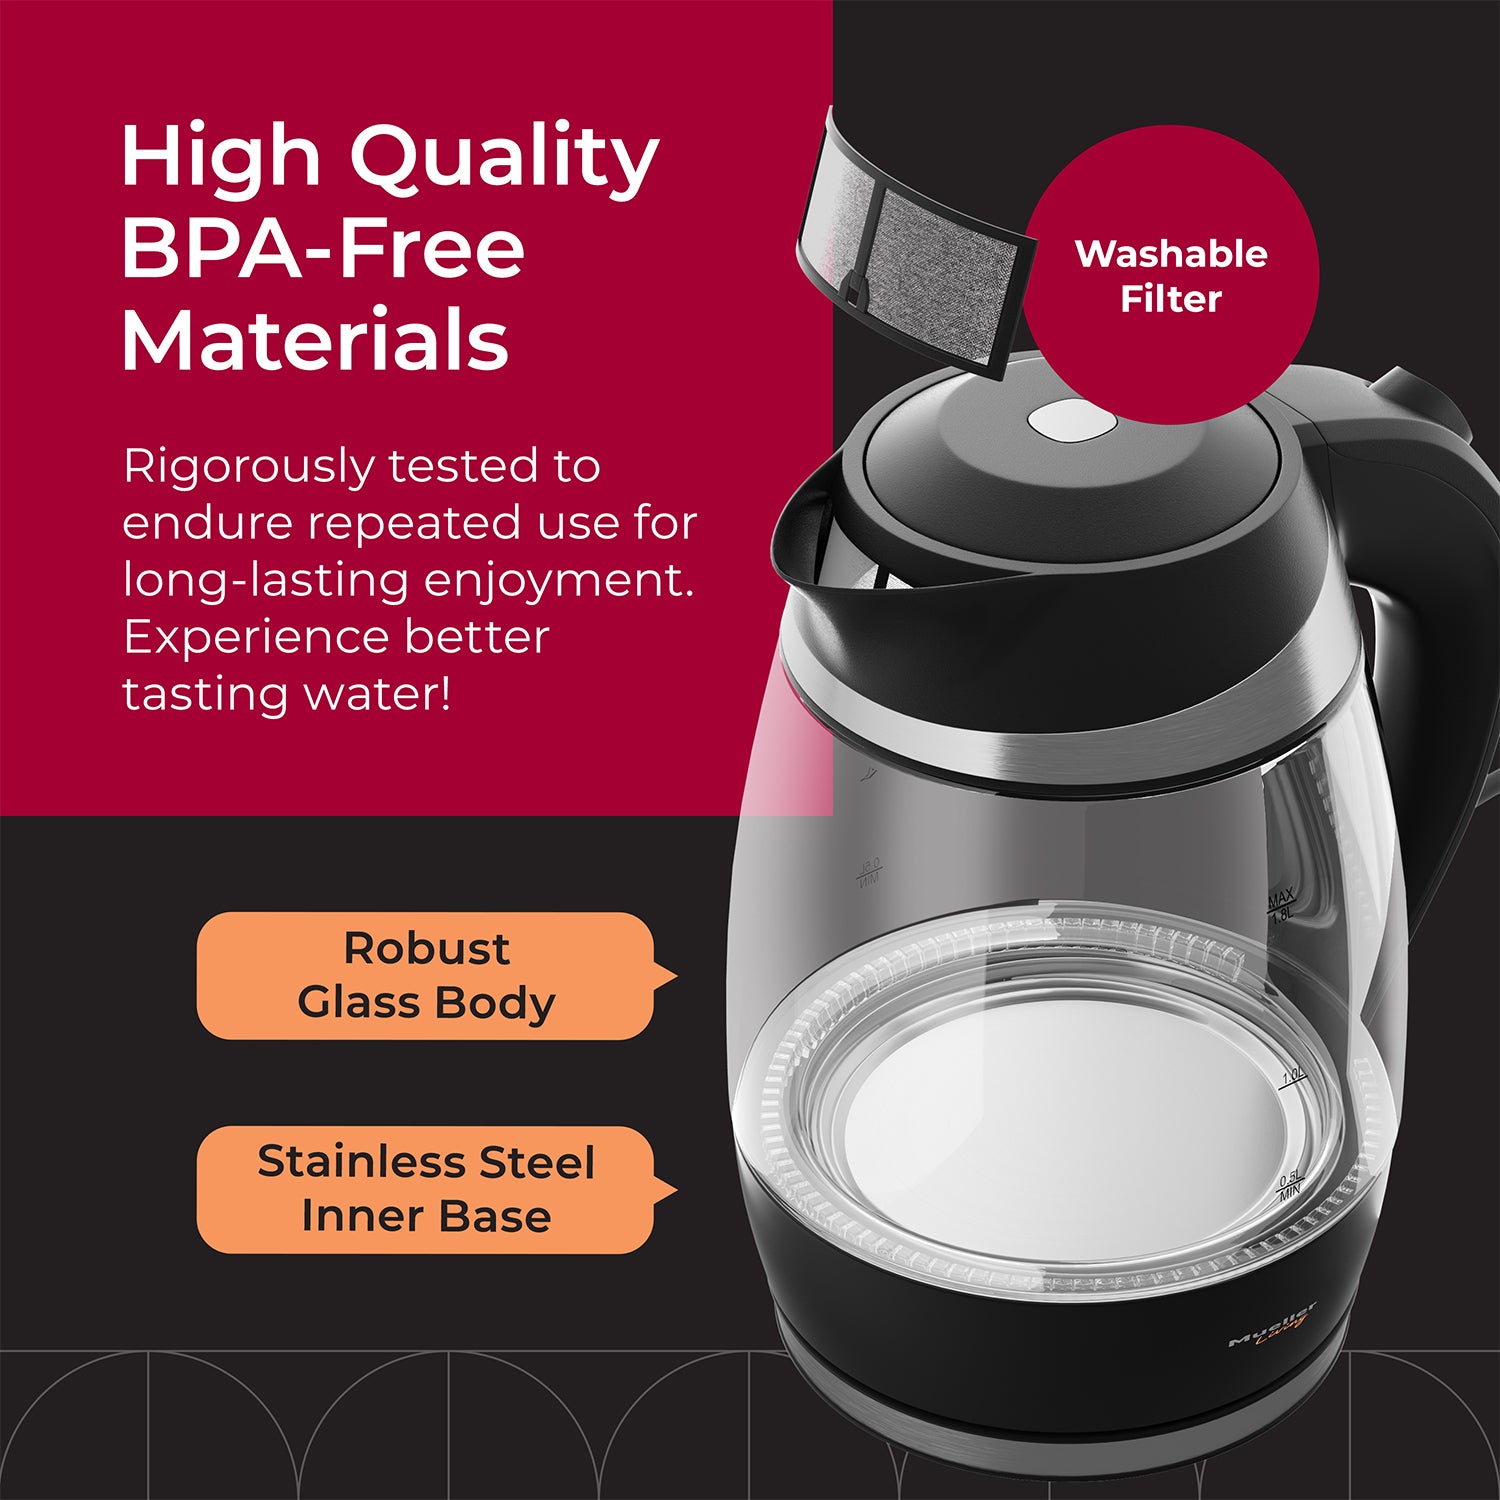 Prestige Electric Tea Kettle Stainless Steel Cordless Coffee Pot Hot Water  1.7 L